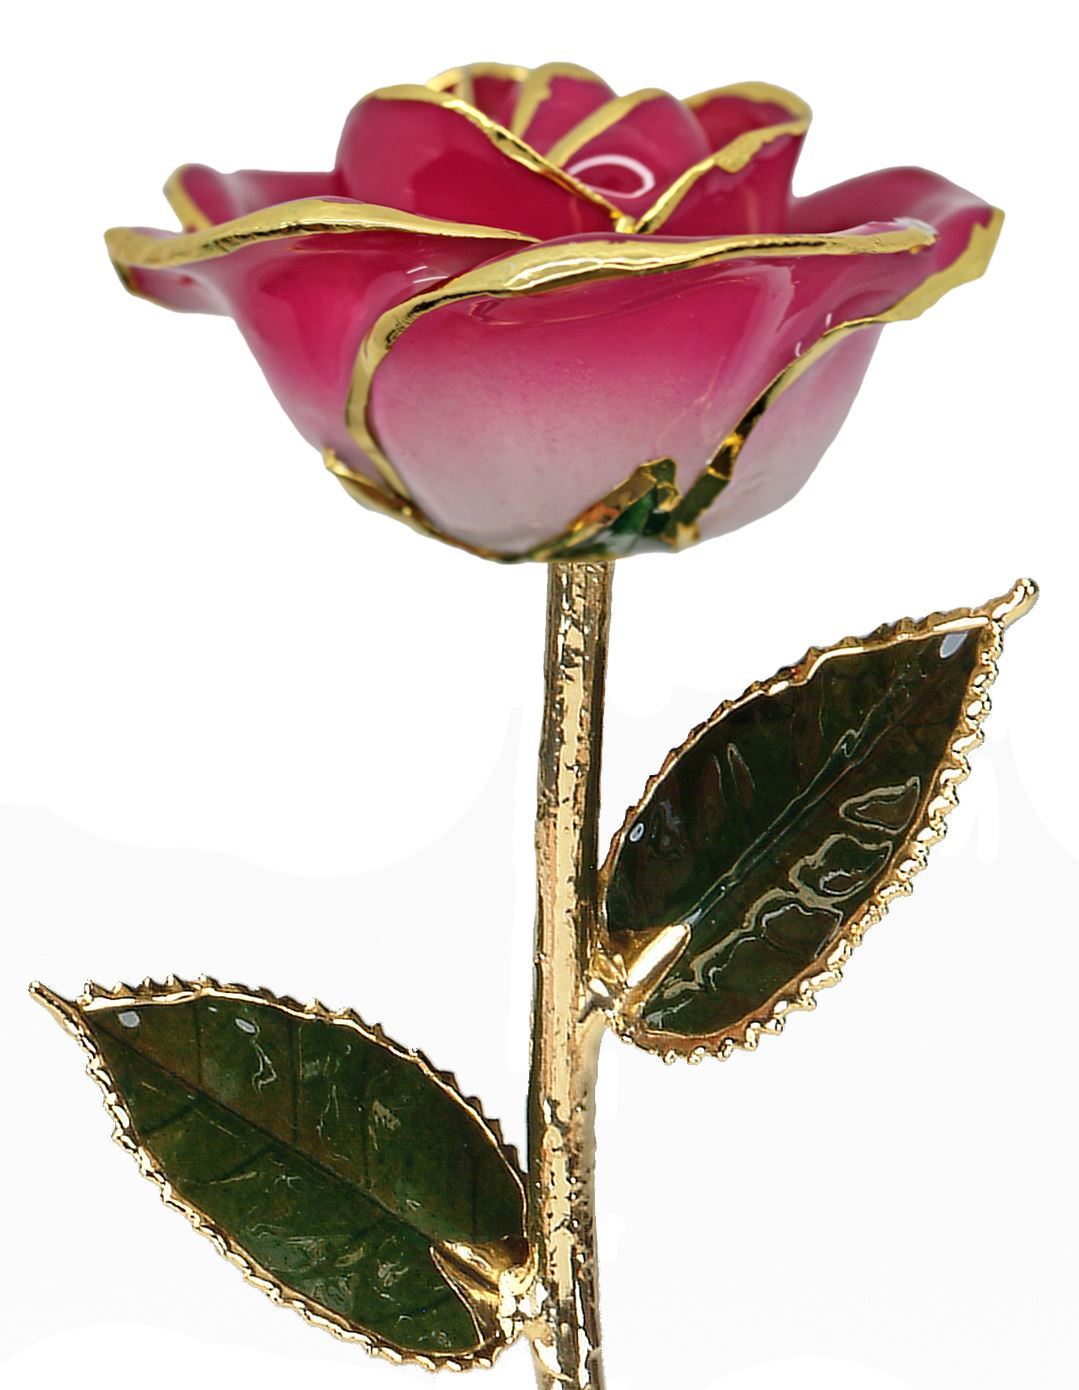 https://www.arthursjewelers.com/content/images/thumbs/Original/white-pink-rose_1-19361800.jpeg